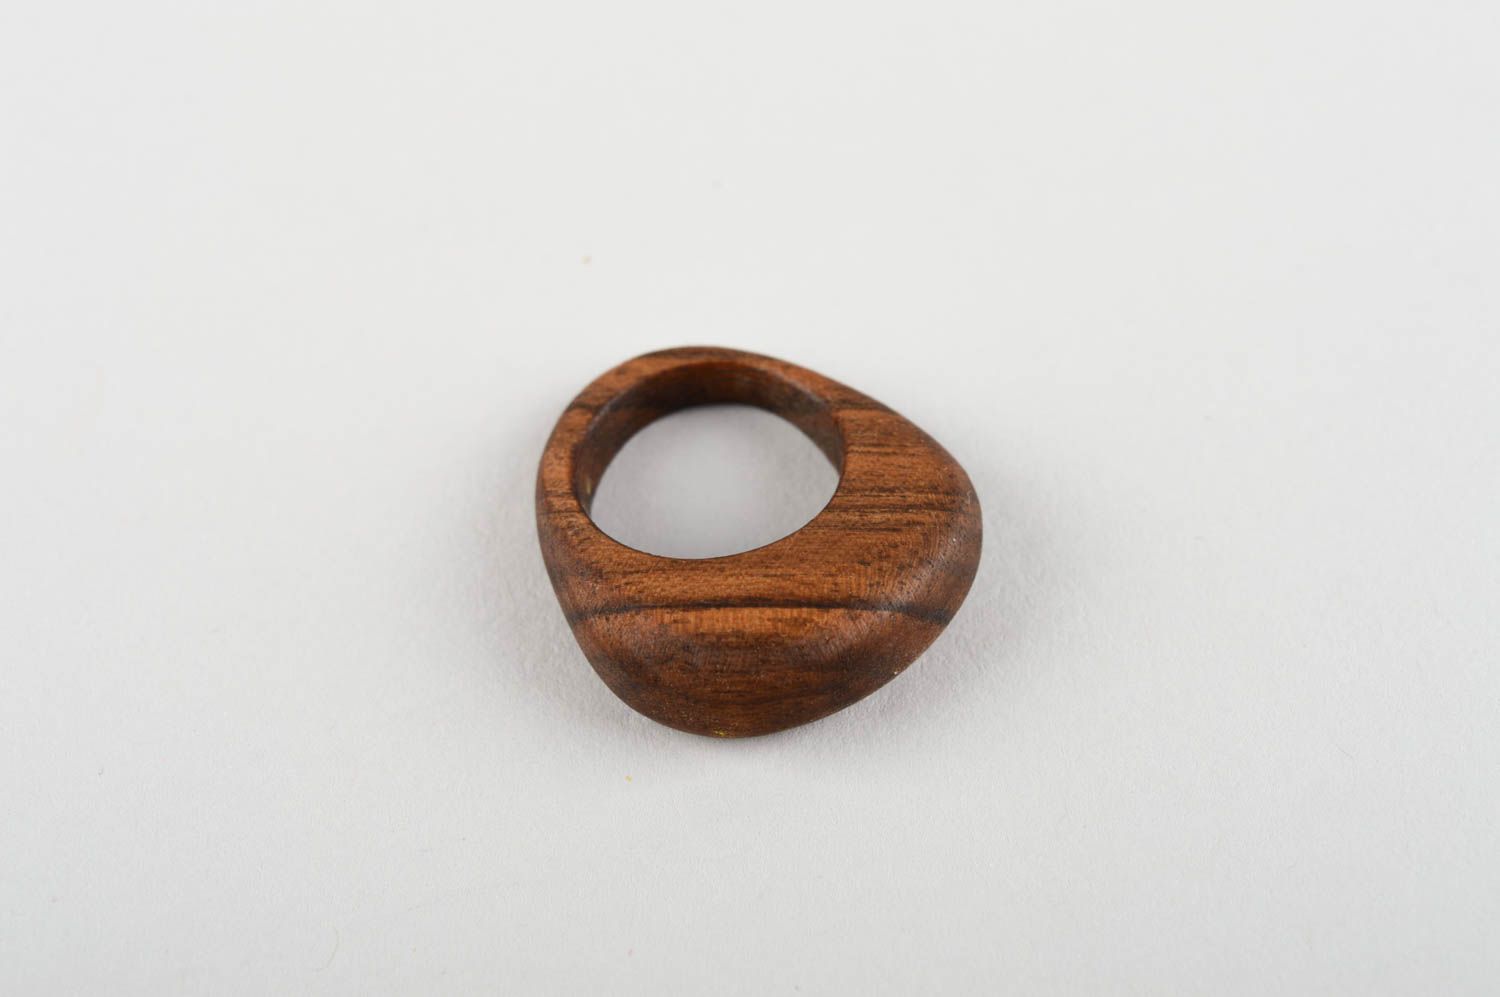 Stylish handmade wooden ring wooden jewelry costume jewelry designs gift ideas photo 5